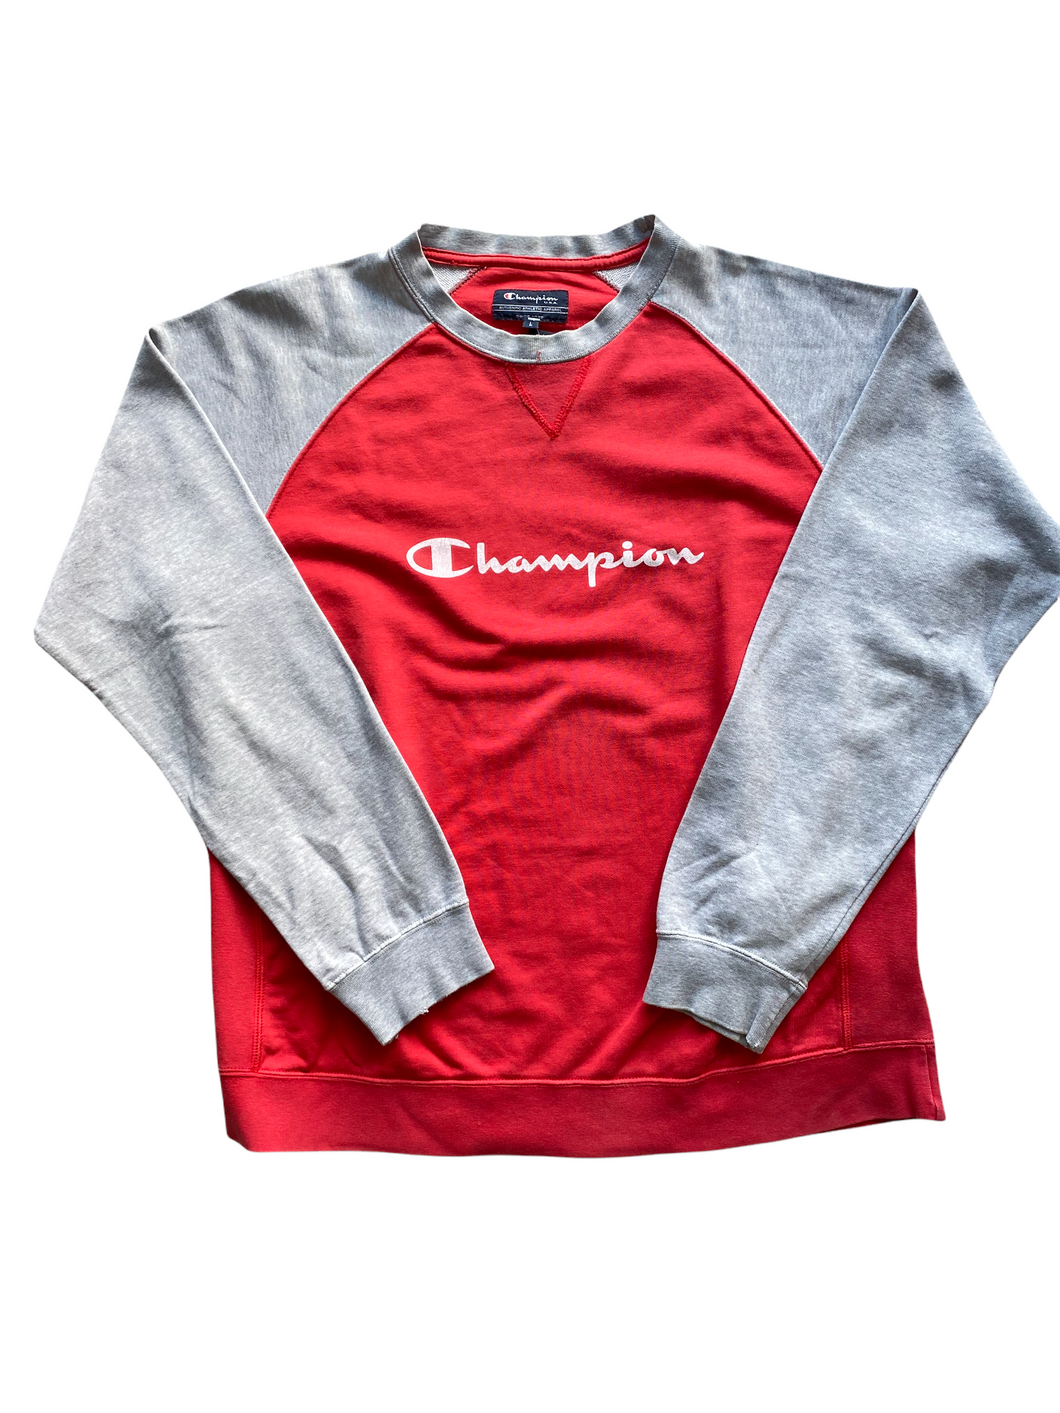 Vintage Champion Sweater (L)